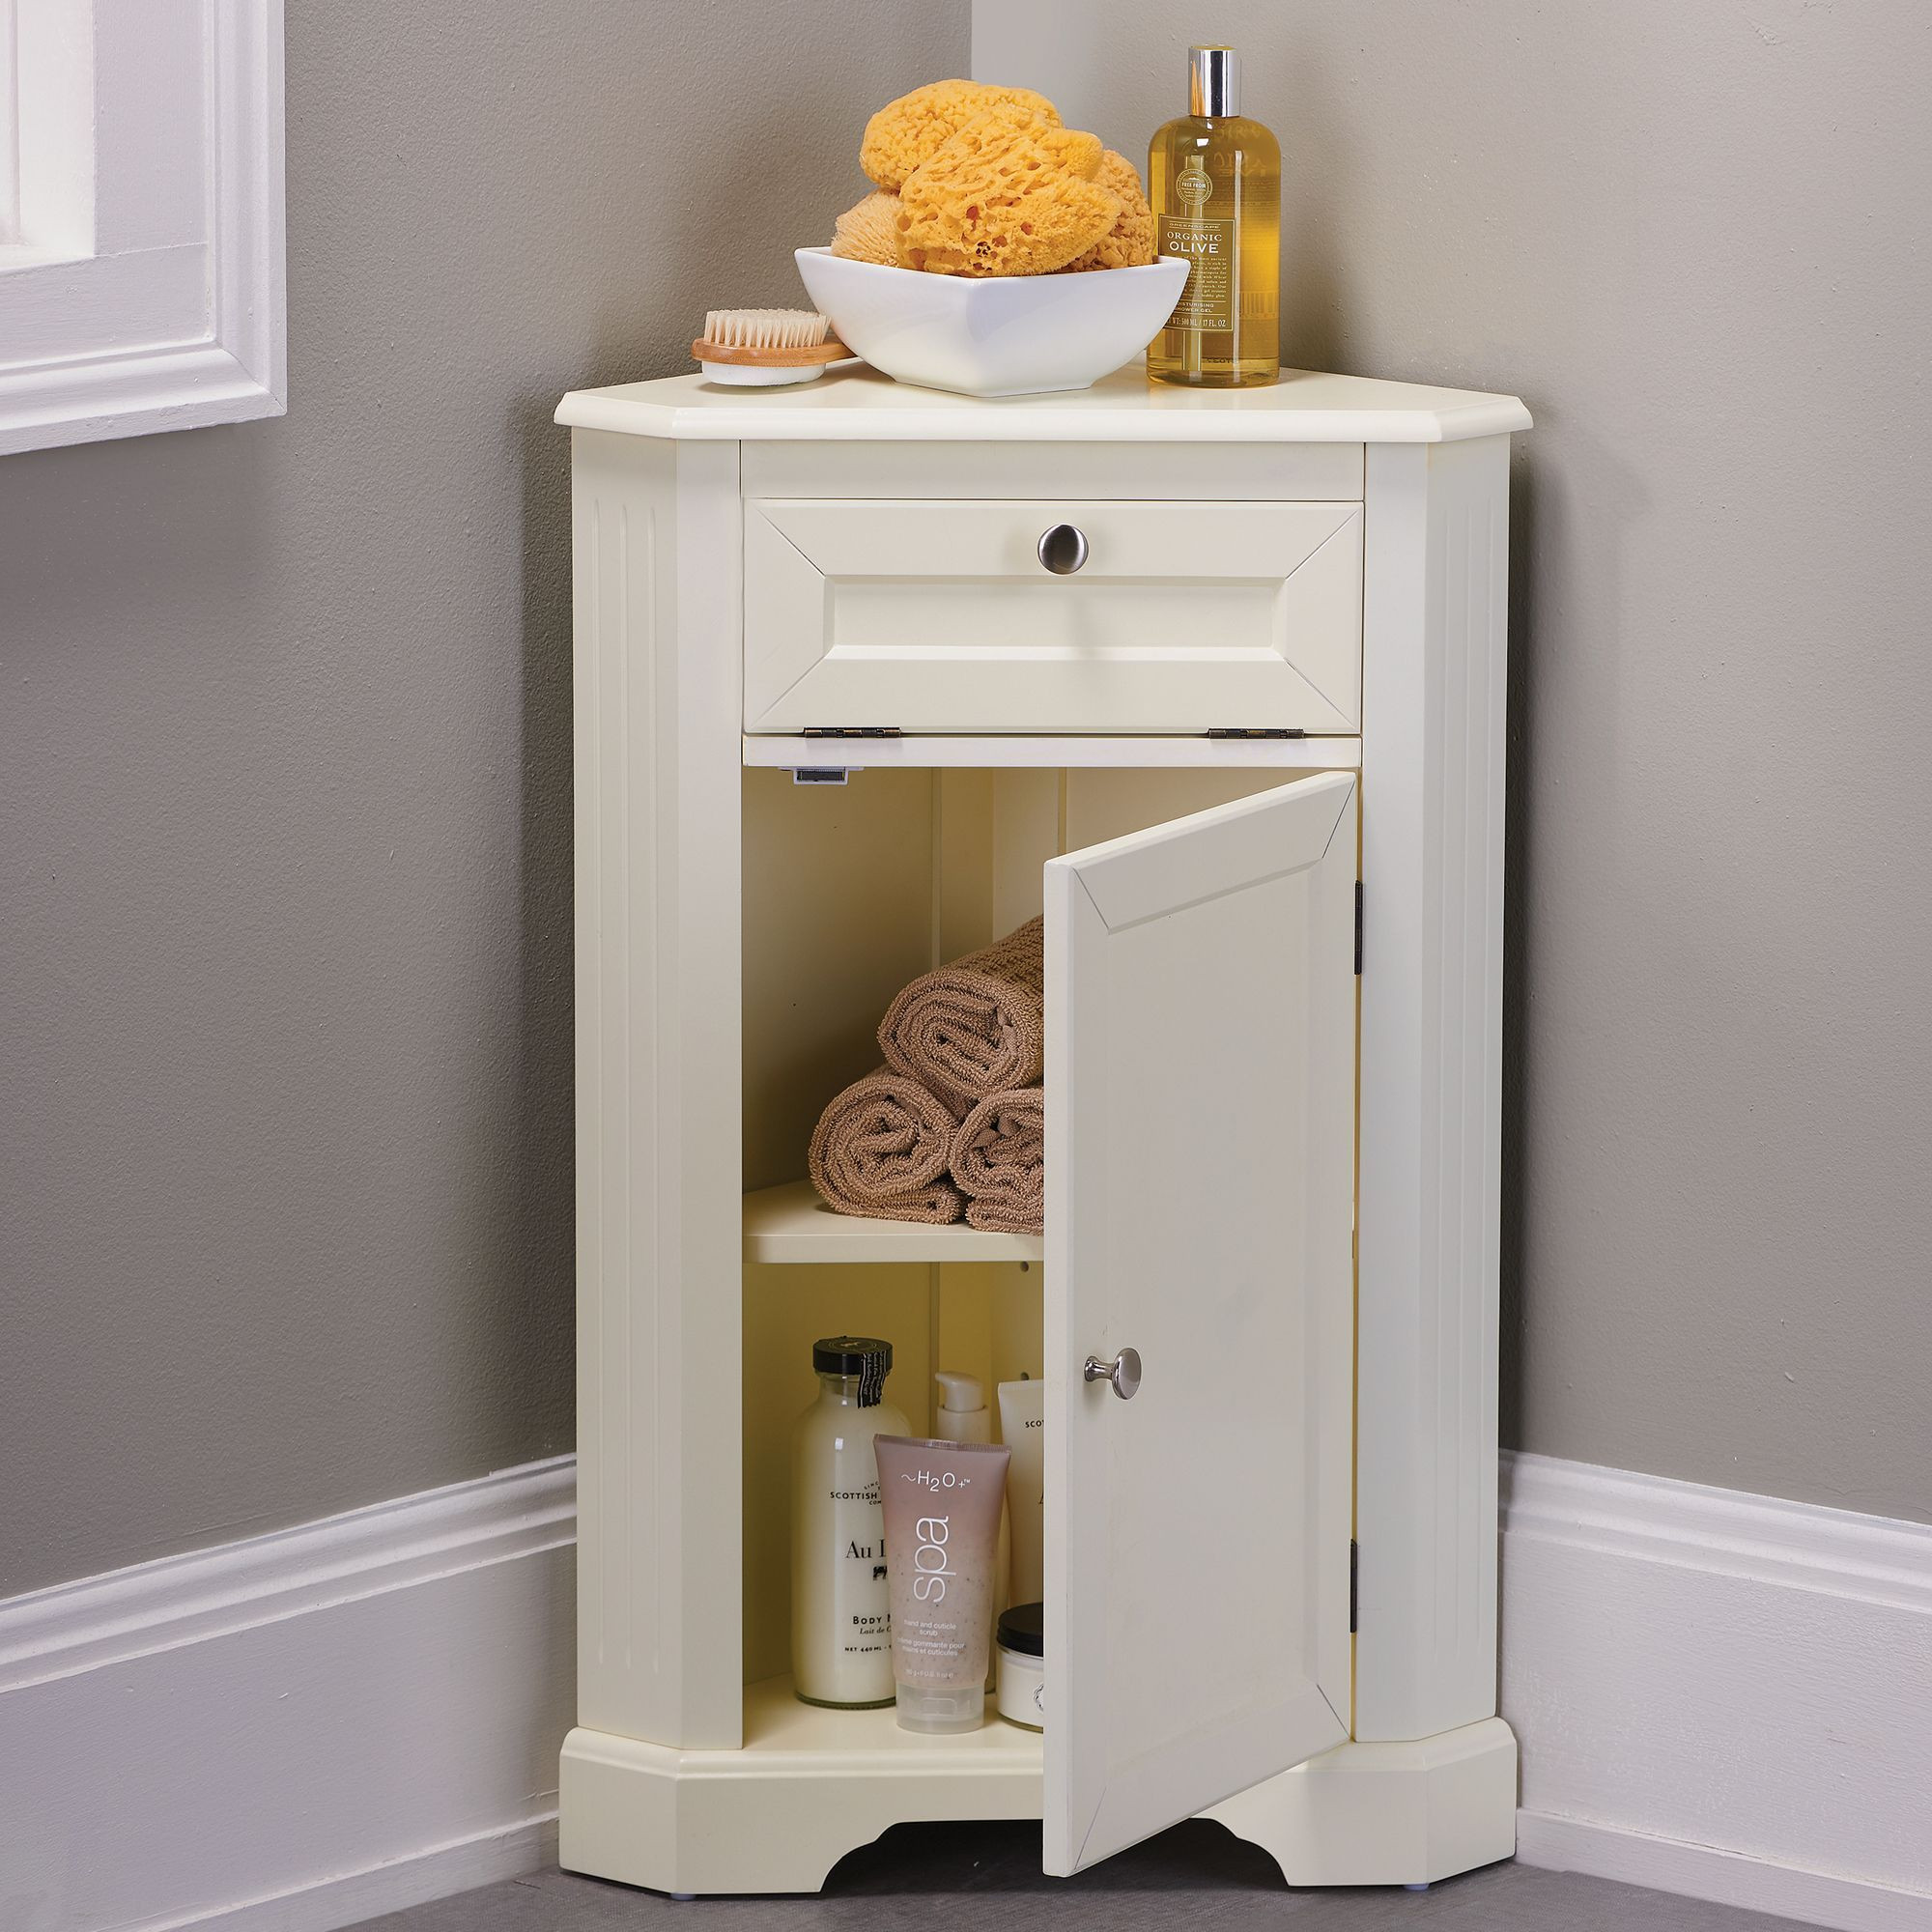 Best ideas about Corner Bathroom Cabinet
. Save or Pin Weatherby Bathroom Corner Storage Cabinet Now.